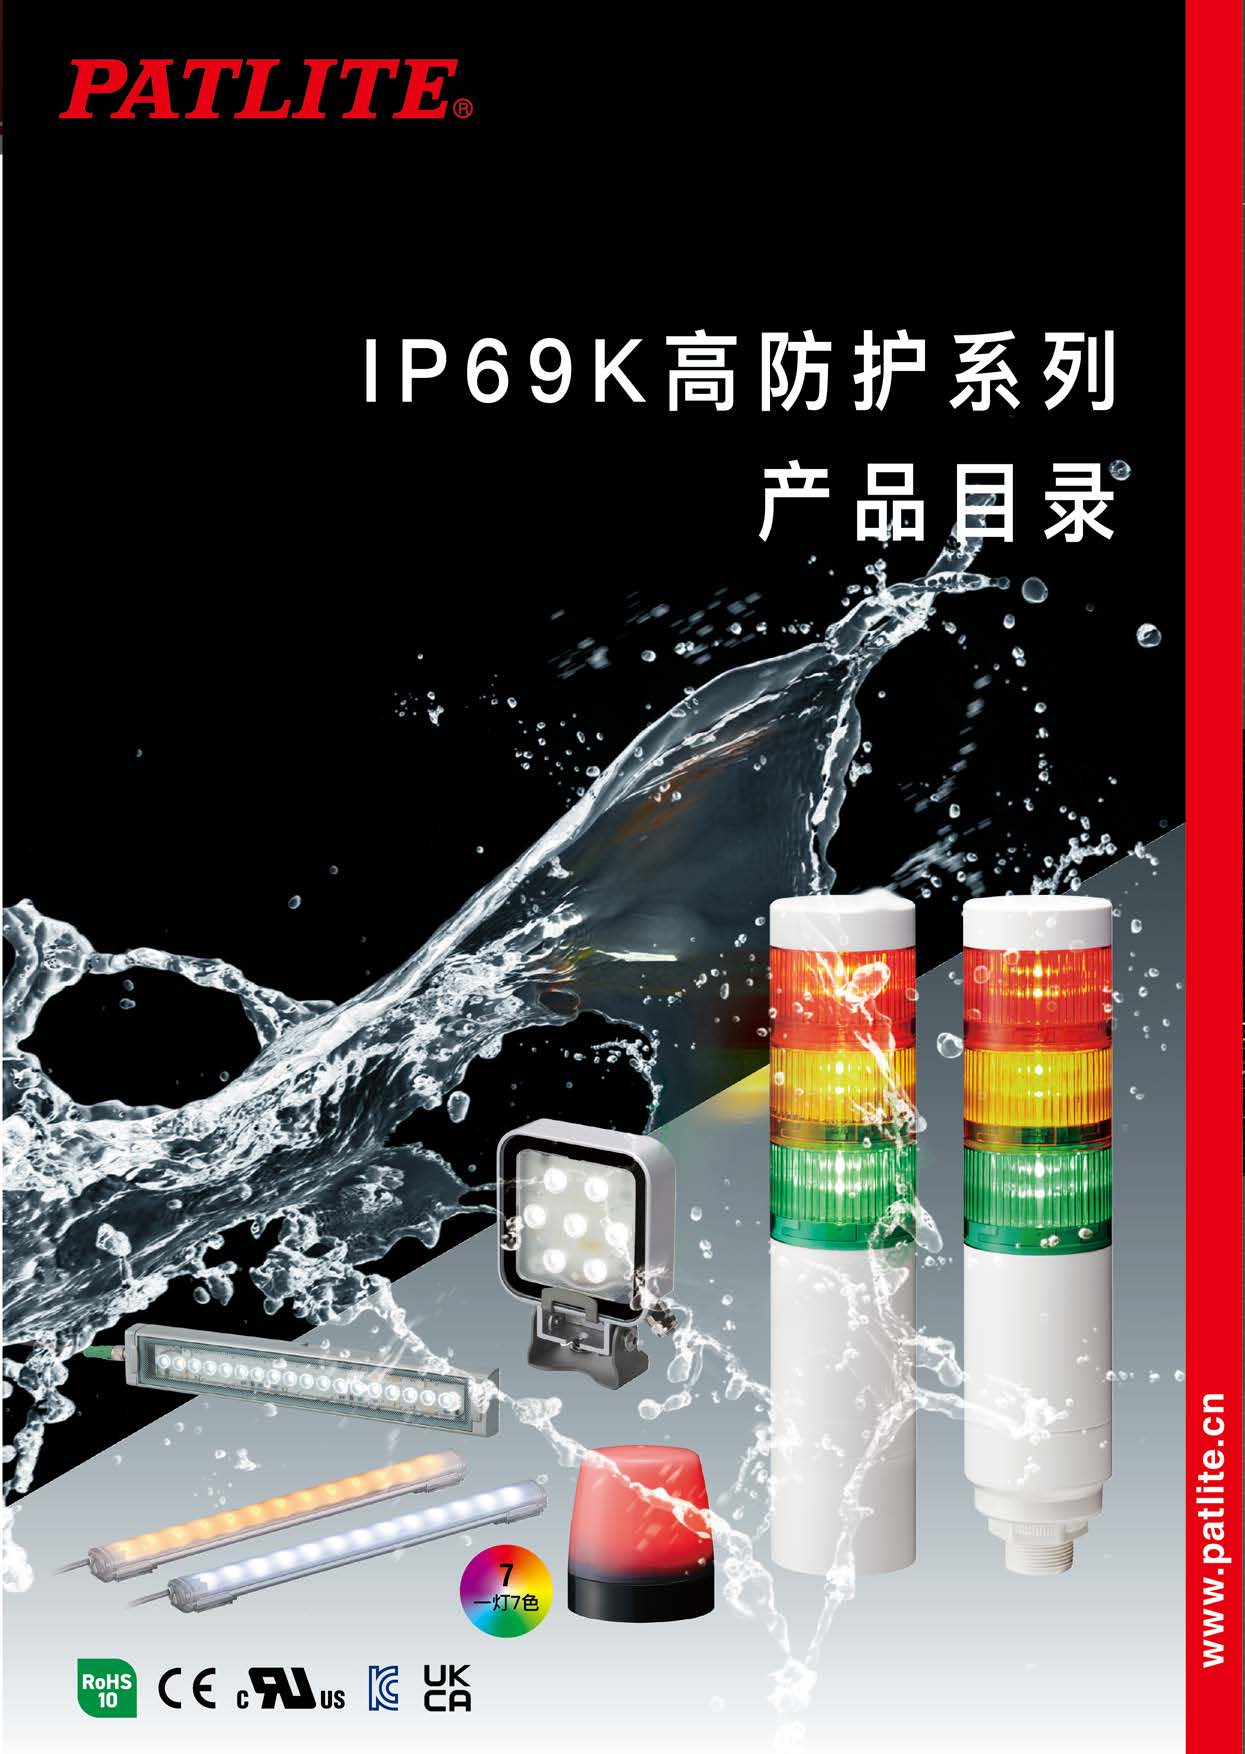 IP69K高防护系列<br>产品目录